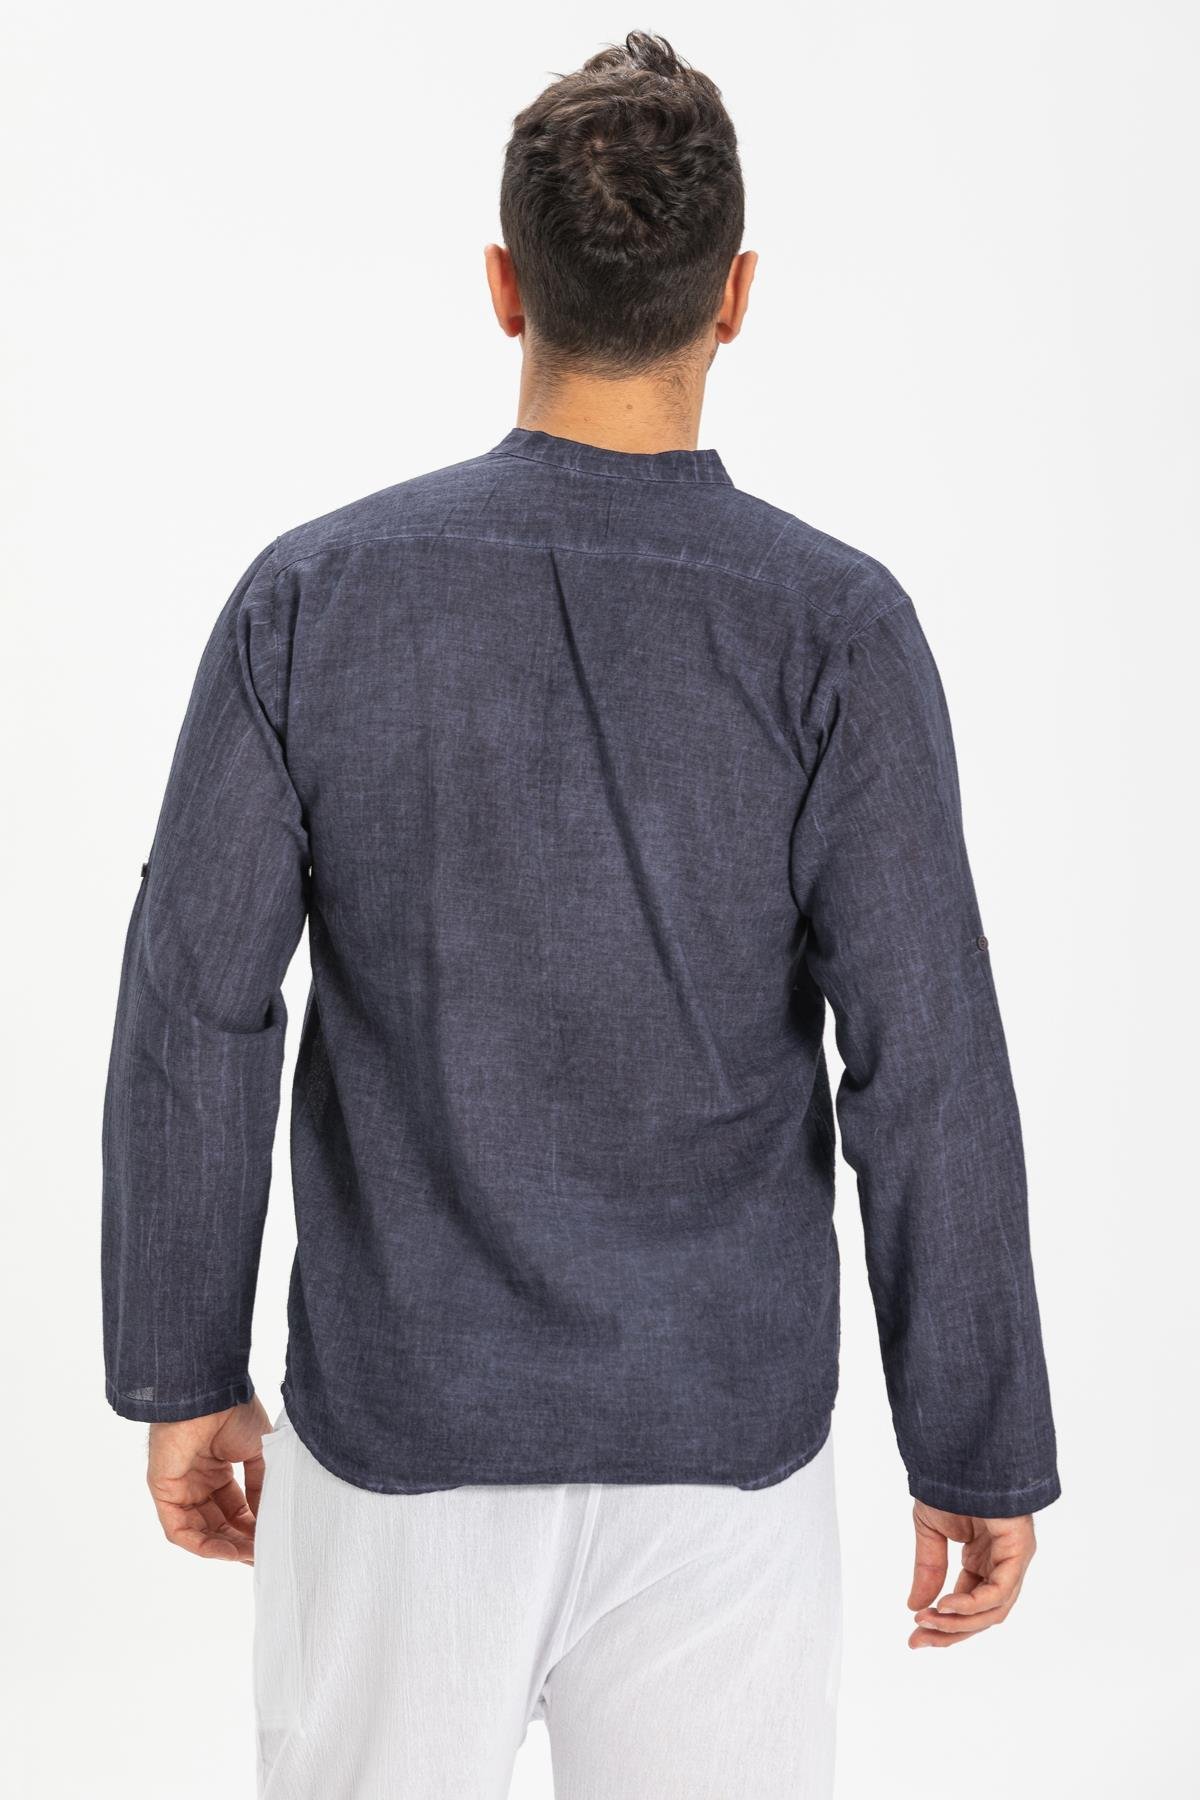 Long Sleeve Şile Fabric Bodrum Men's T-Shirt İndigo | silemoda.com